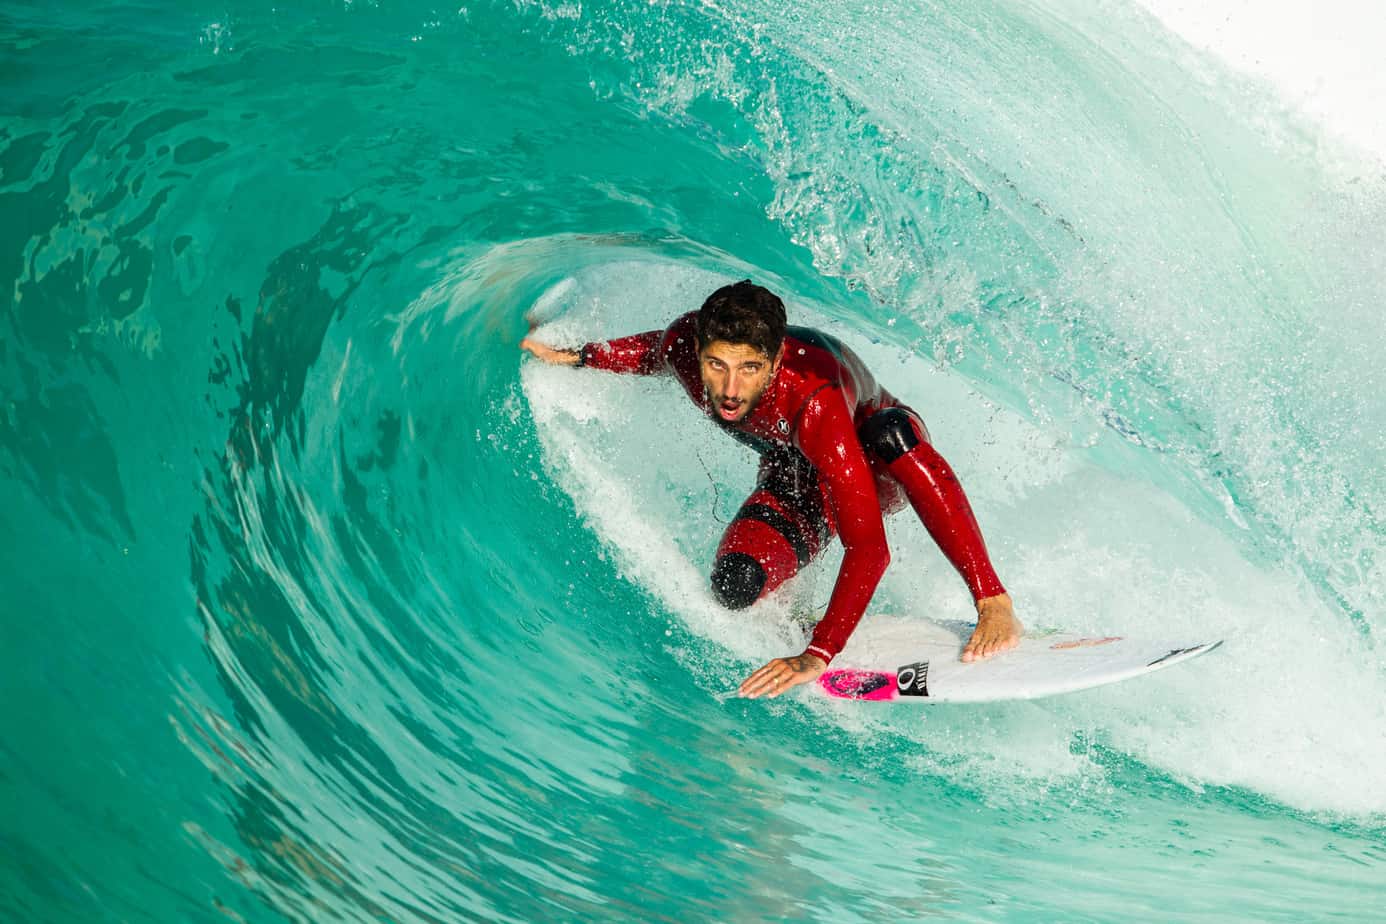 The Bad Boy of Surfing: Filipe Toledo